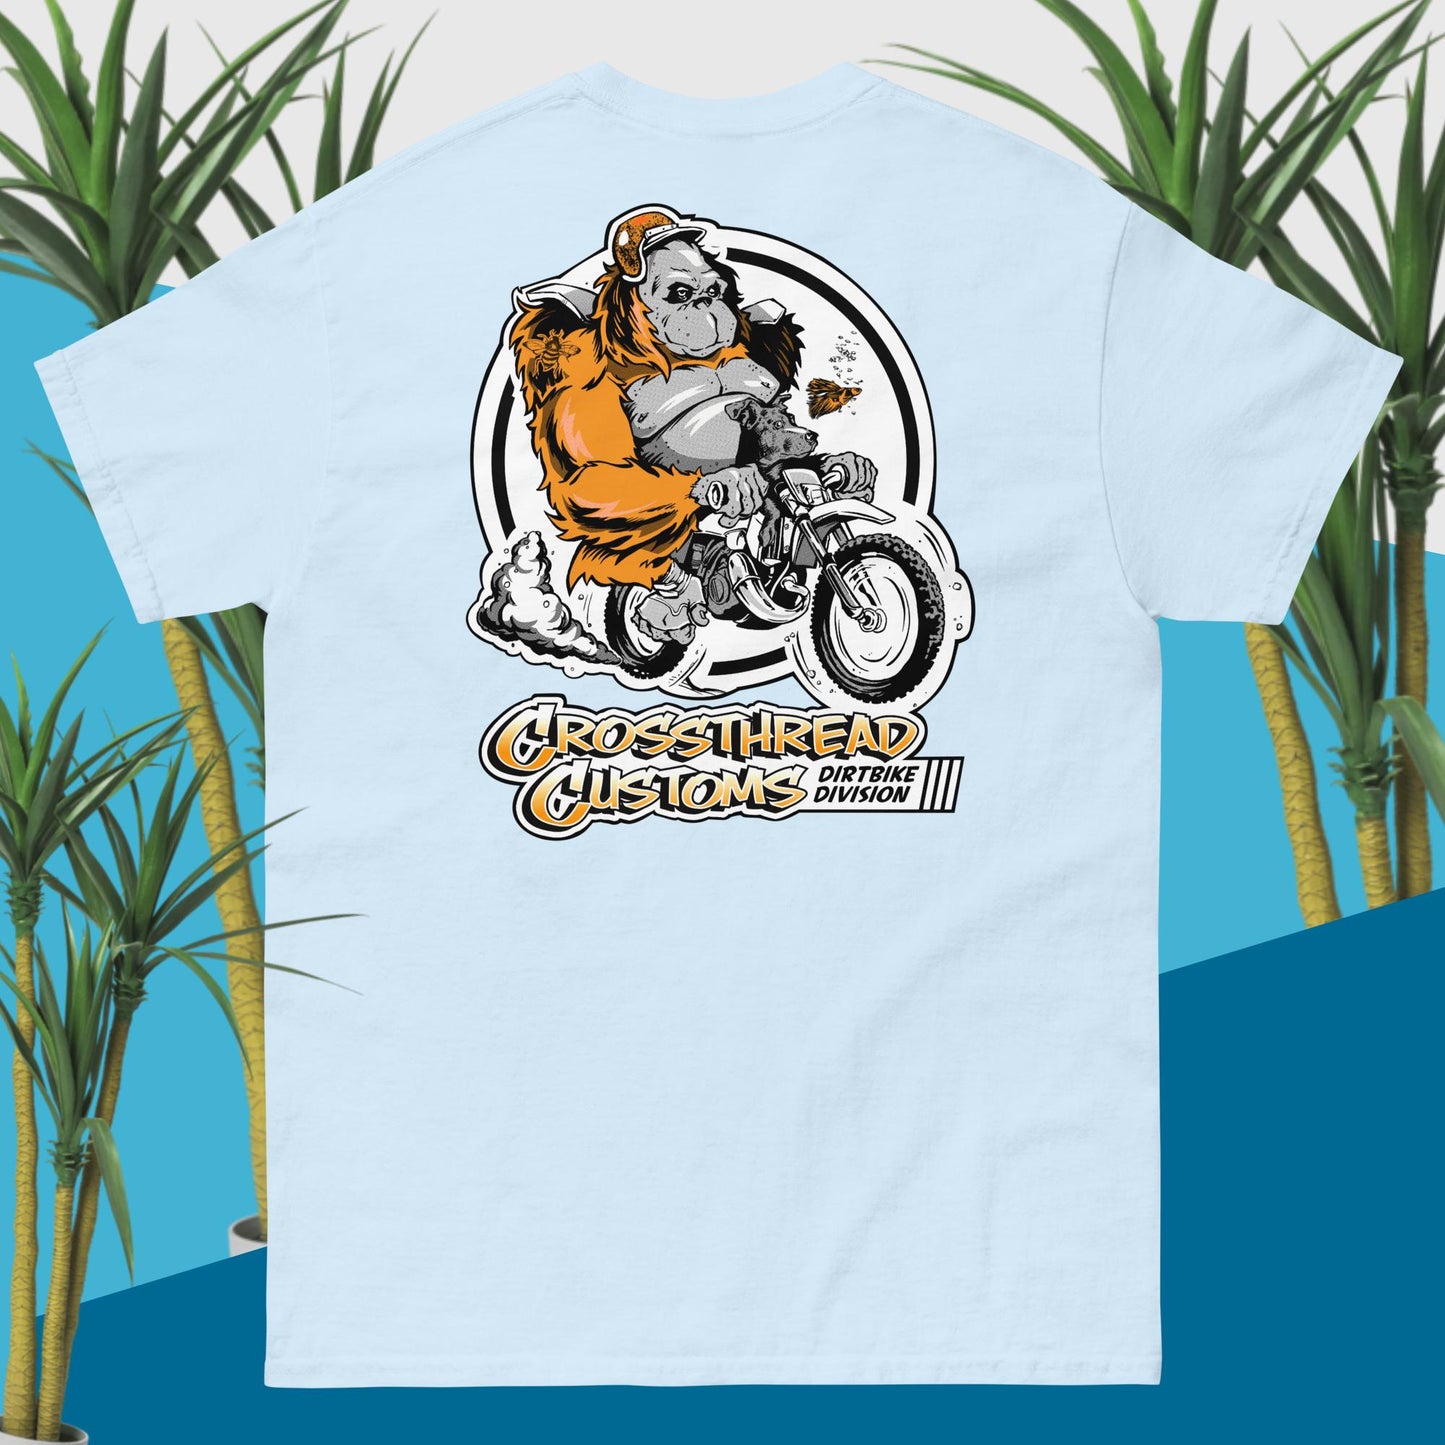 CrossThread Customs DirtBike Division T-Shirts